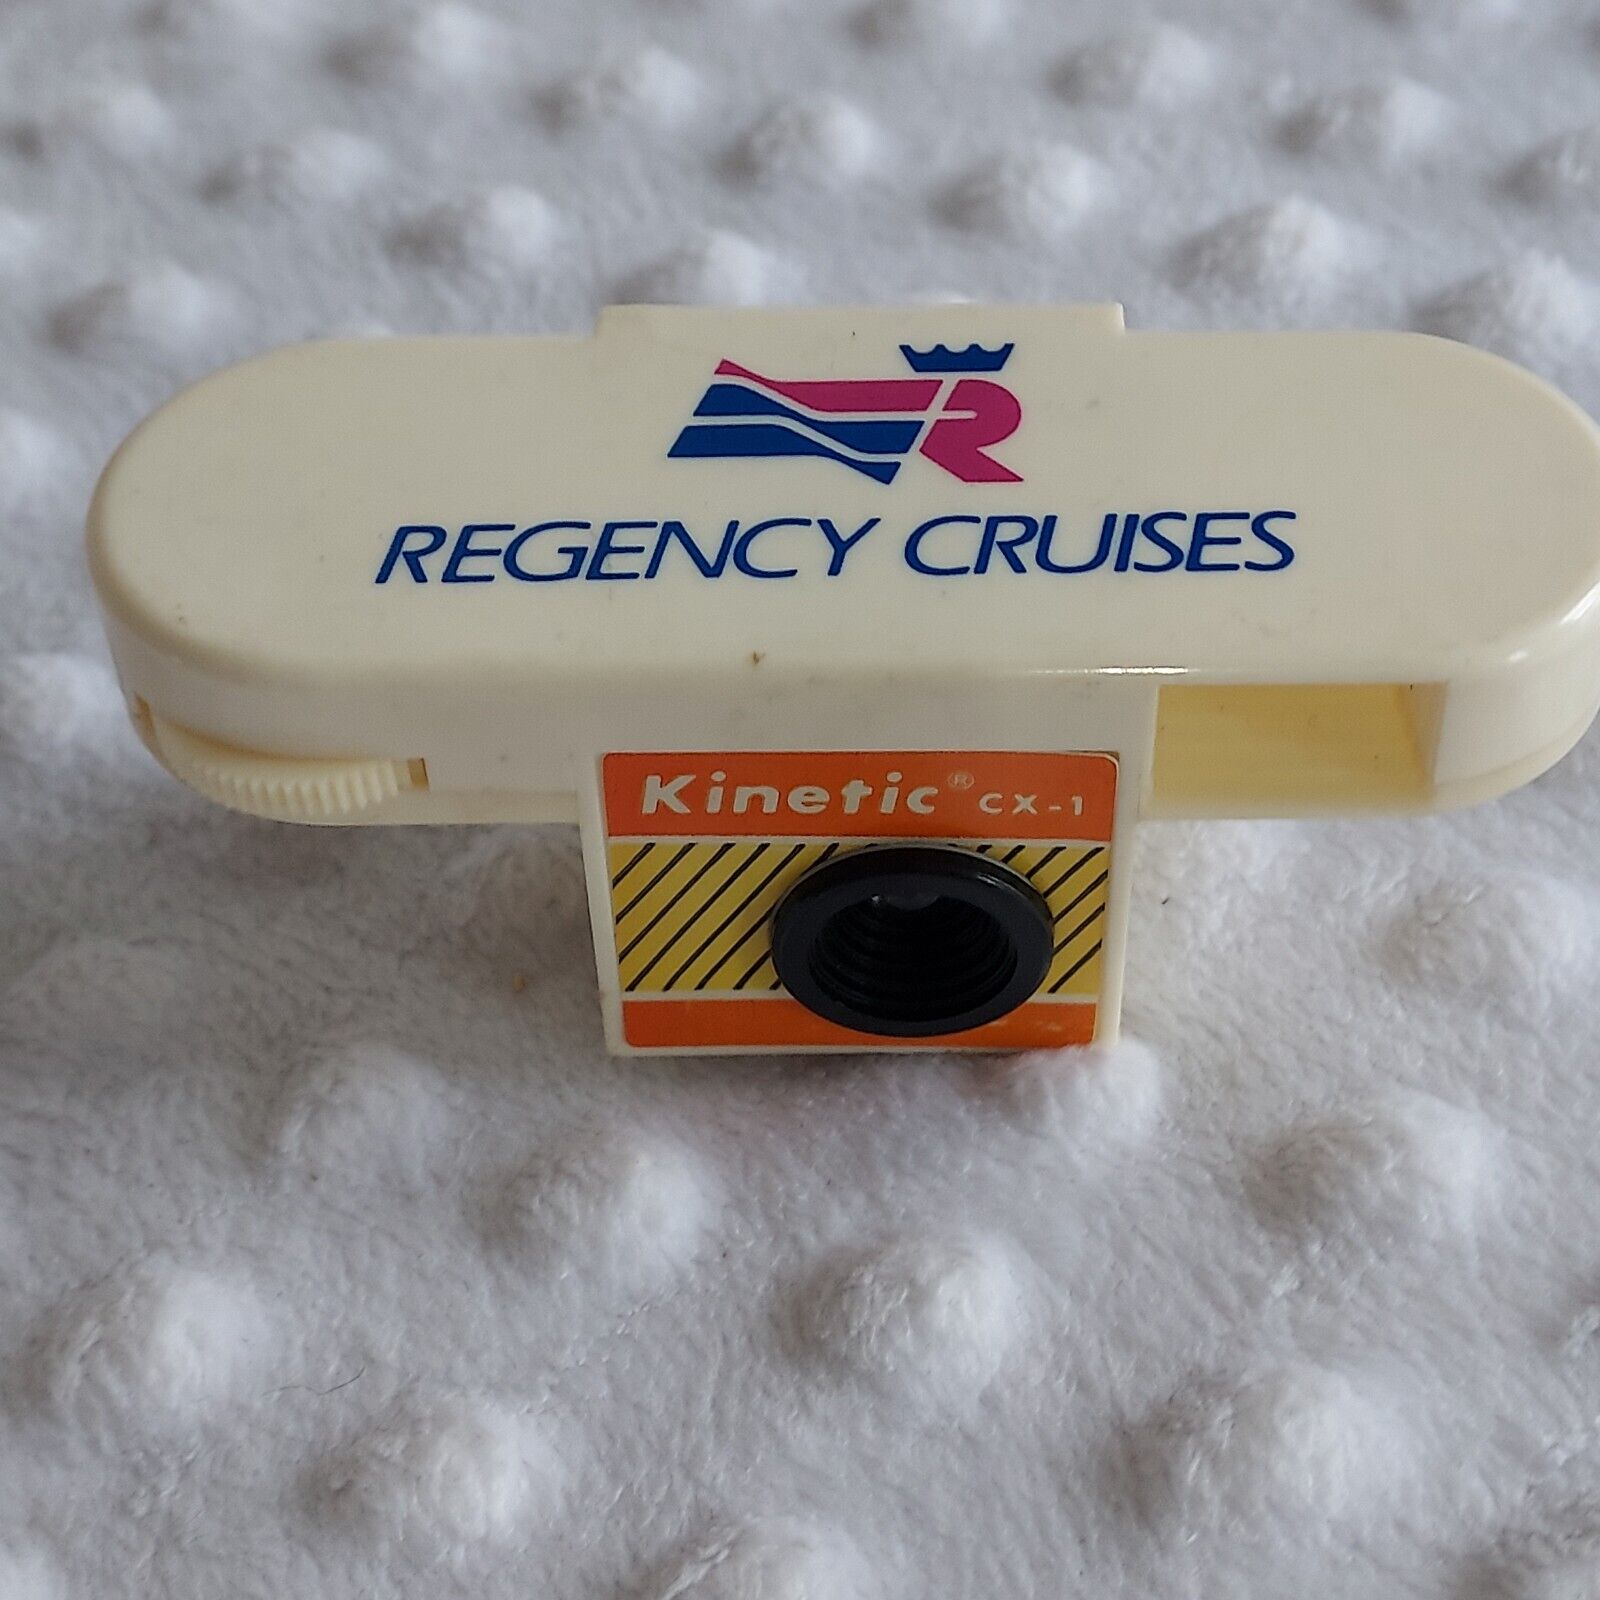 Vintage Keychain Regency Cruises Kinetic Camera Advertising Cruise Line Vacation